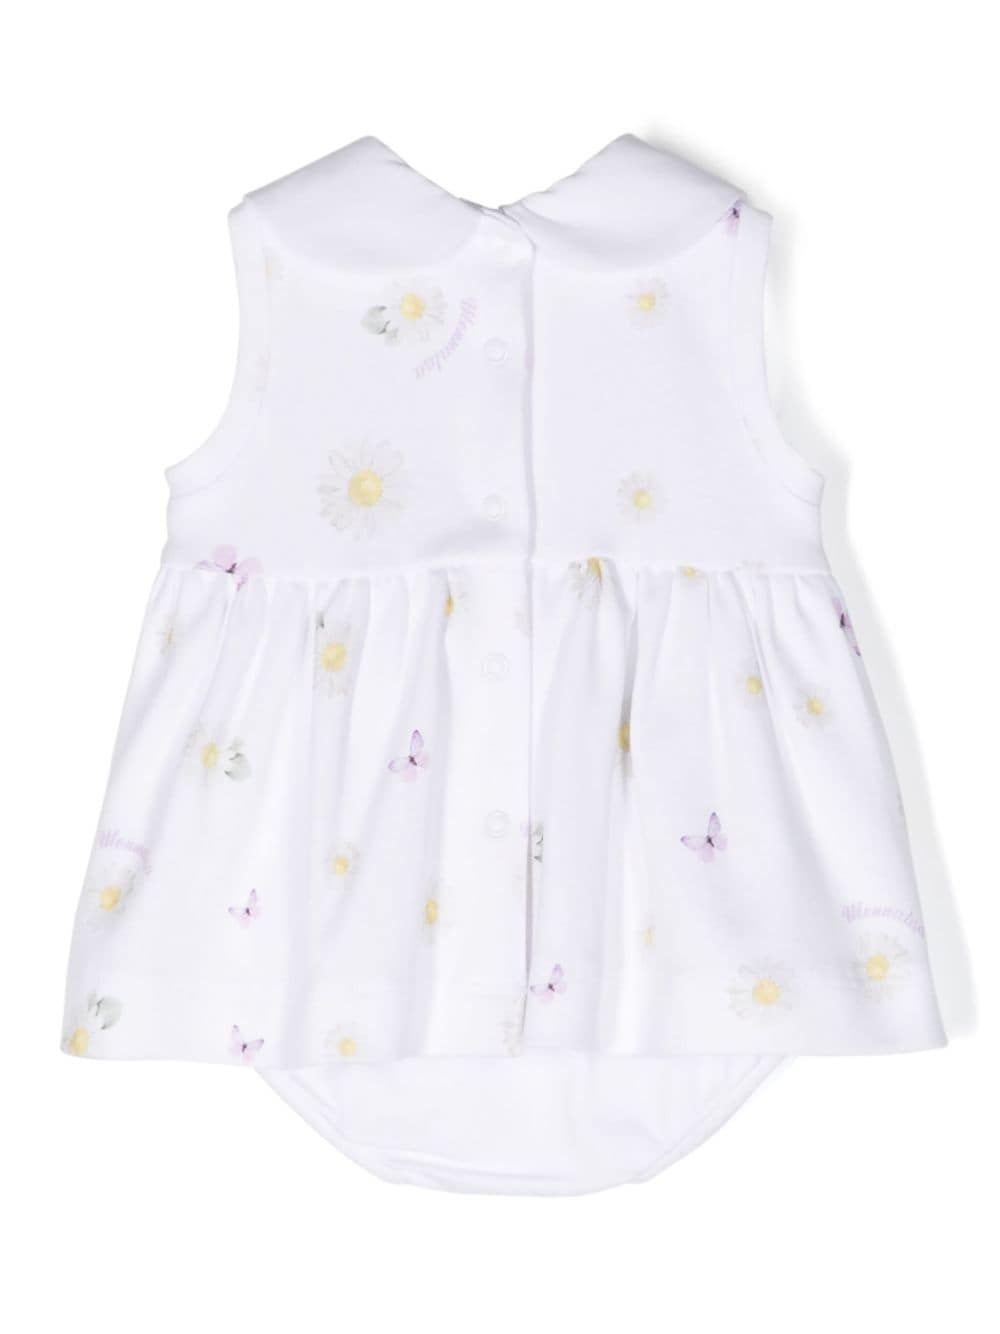 White daisy baby girl dress